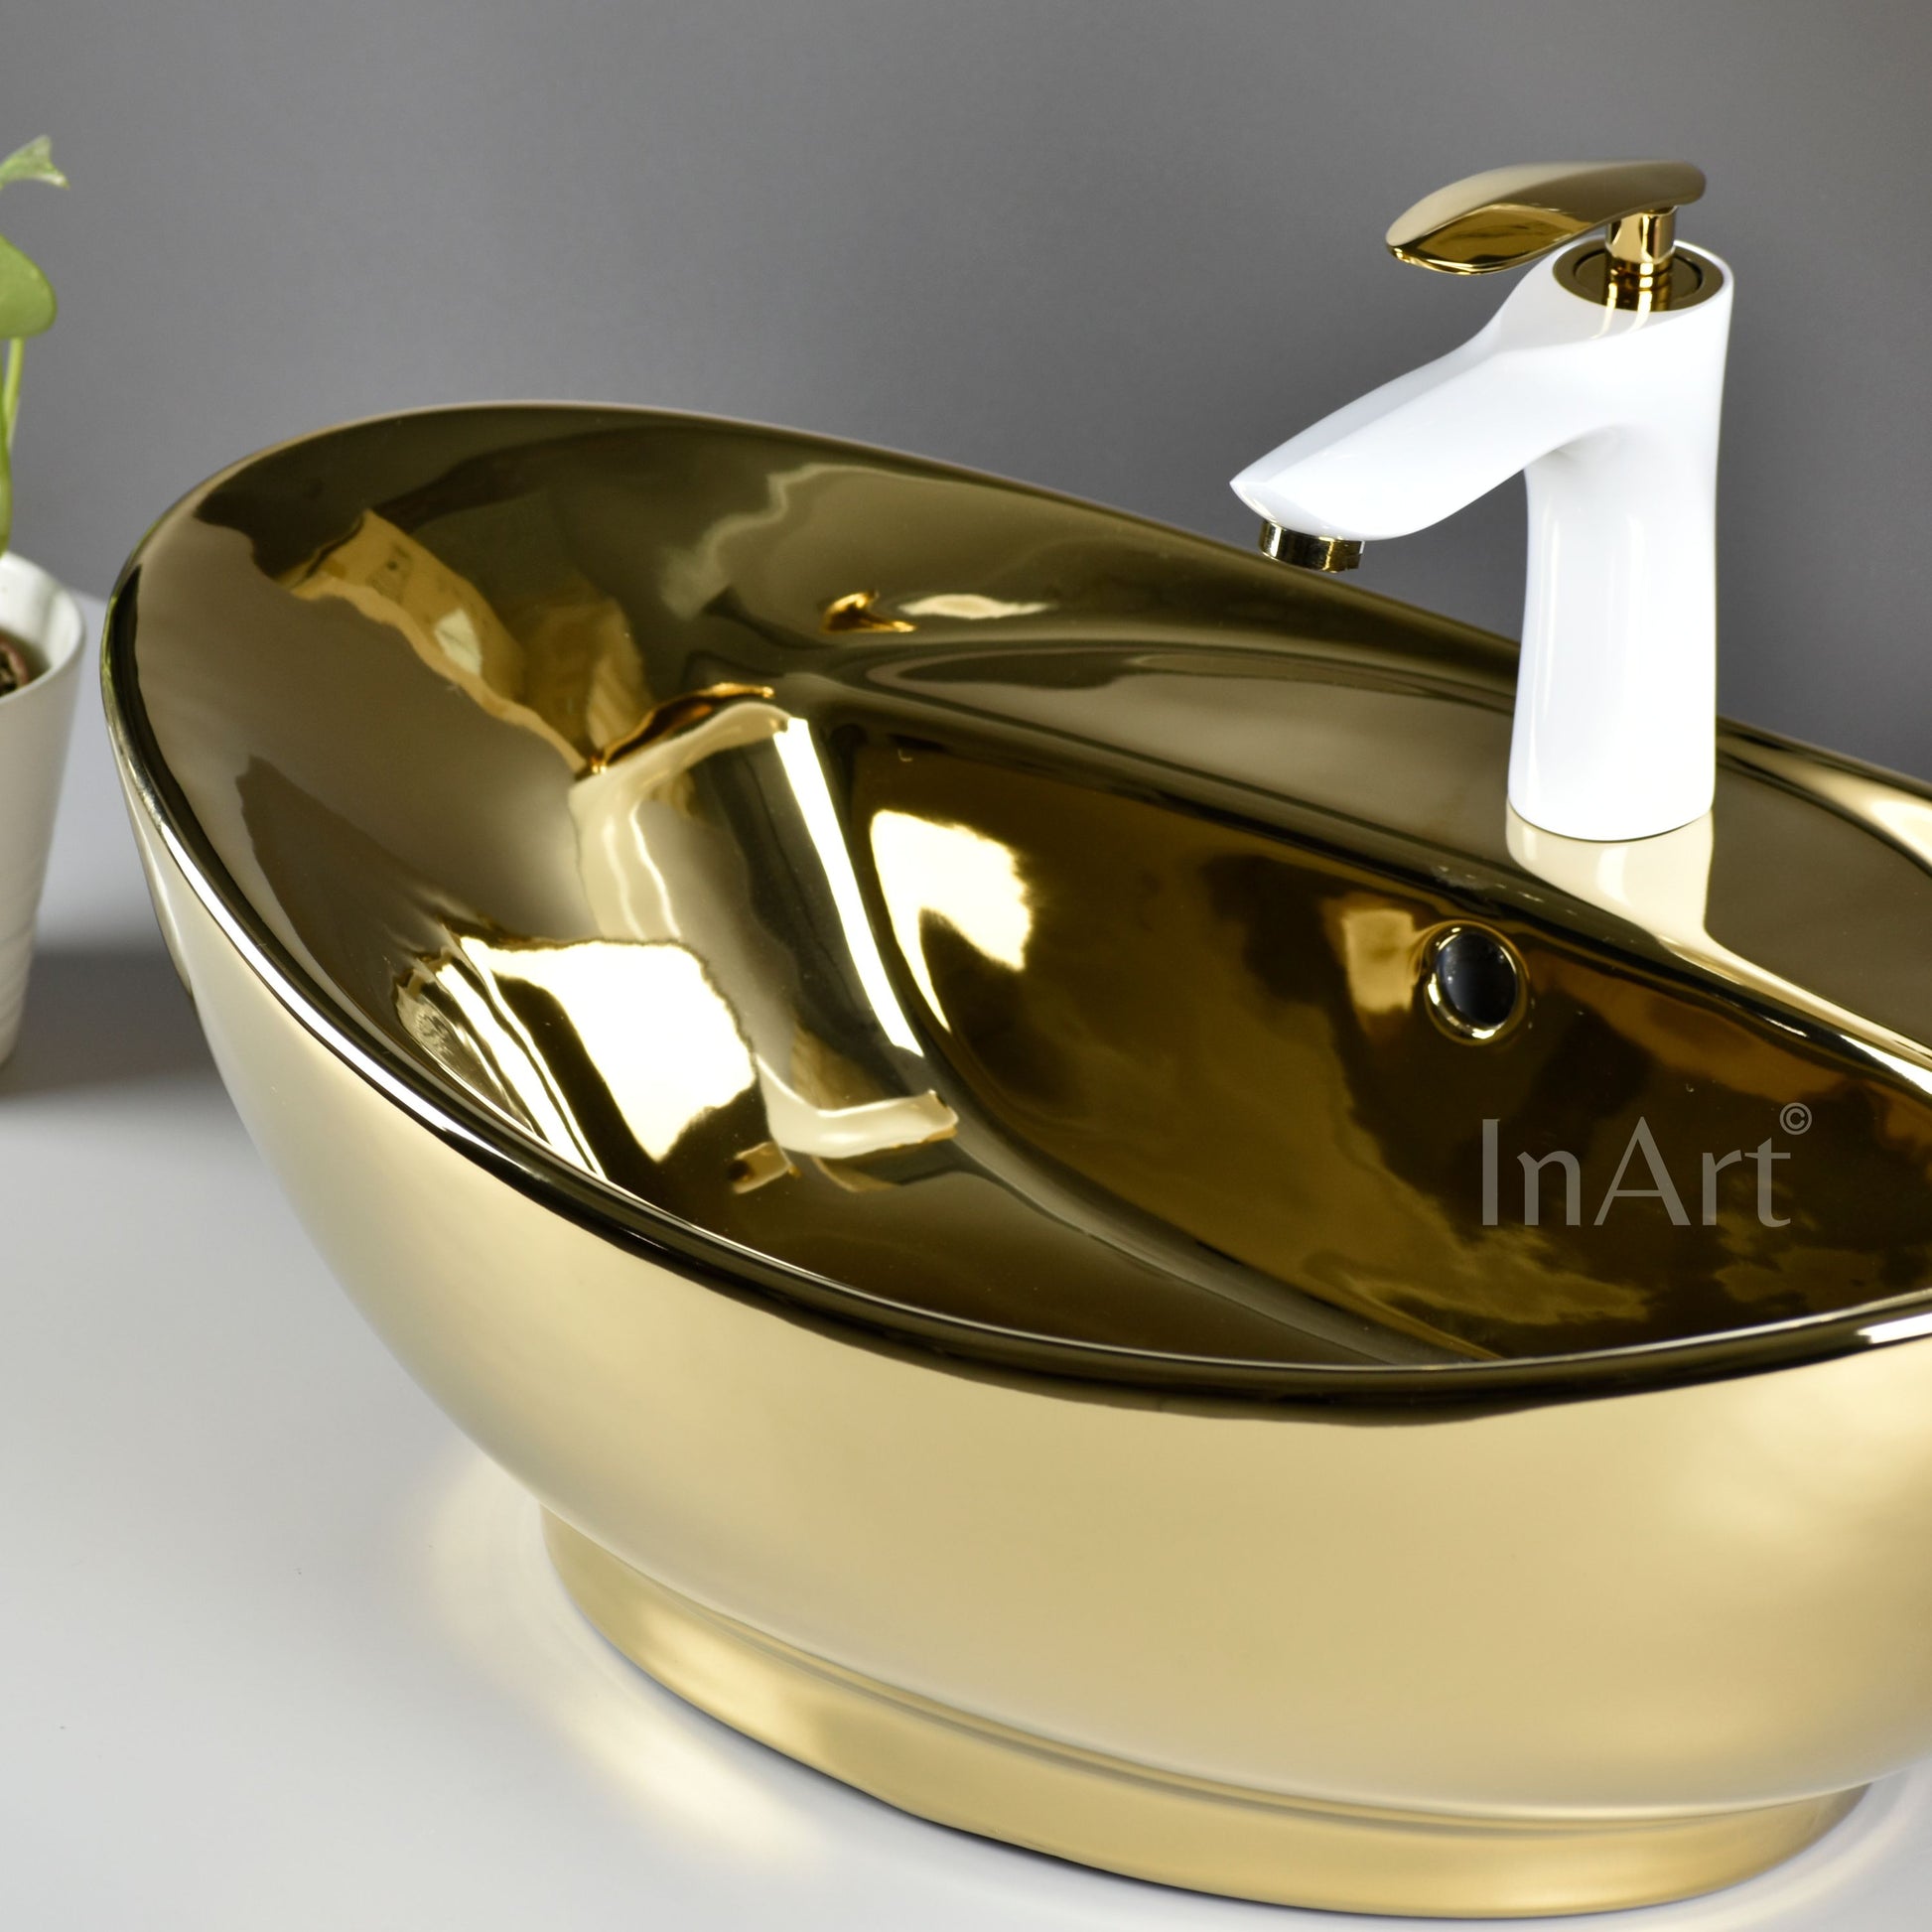 InArt Oval Gold Colored Wash Basin 59 x 39 x 21 cm Premium Vanity Wash Basin DW269 - InArt-Studio